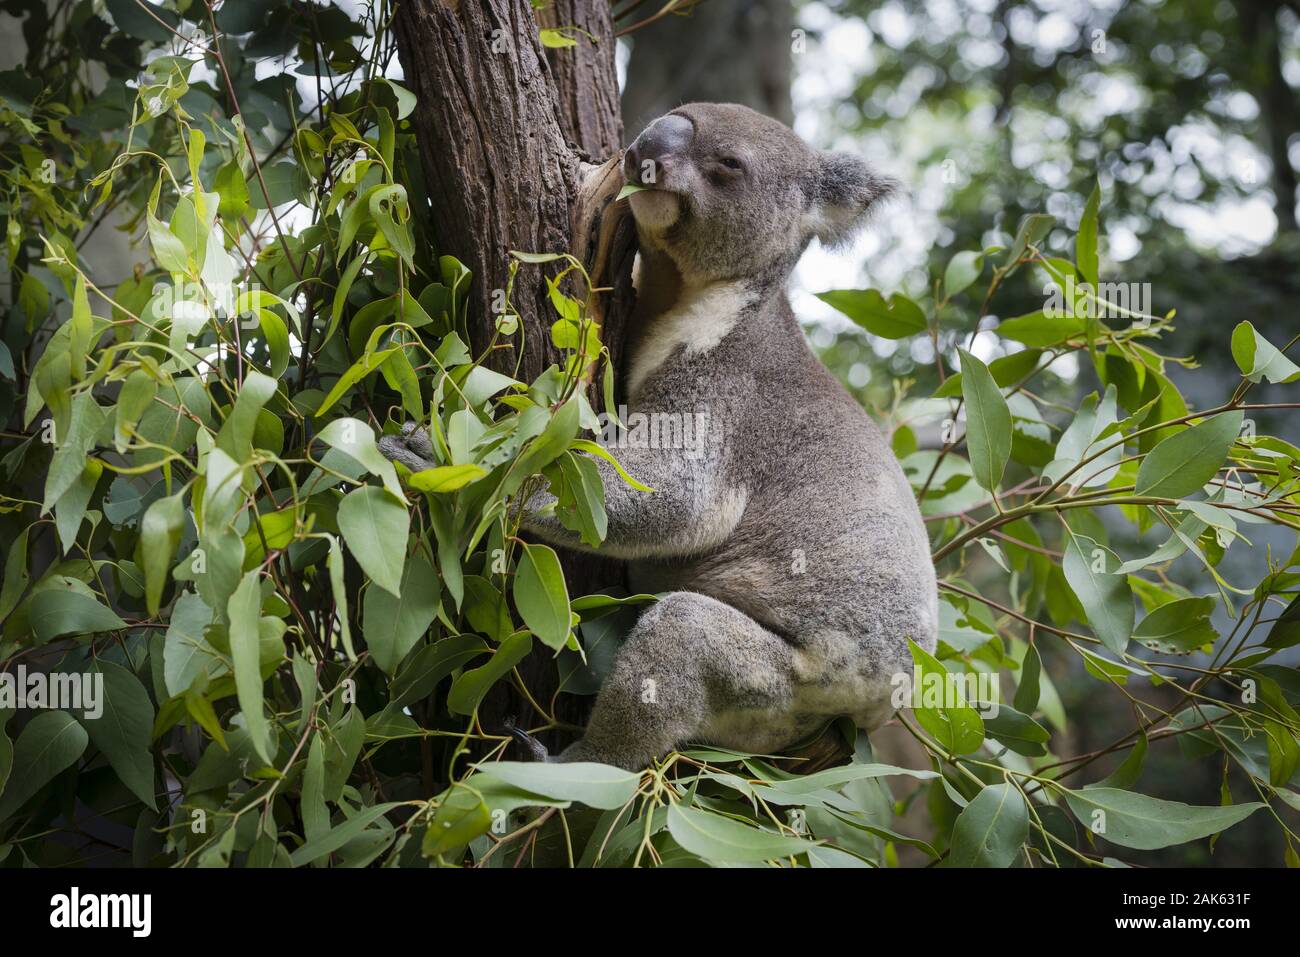 Queensland: Lone Pine Koala Sanctuary, Koala im Tierpark bei Brisbane, Australien Osten | Verwendung weltweit Stockfoto